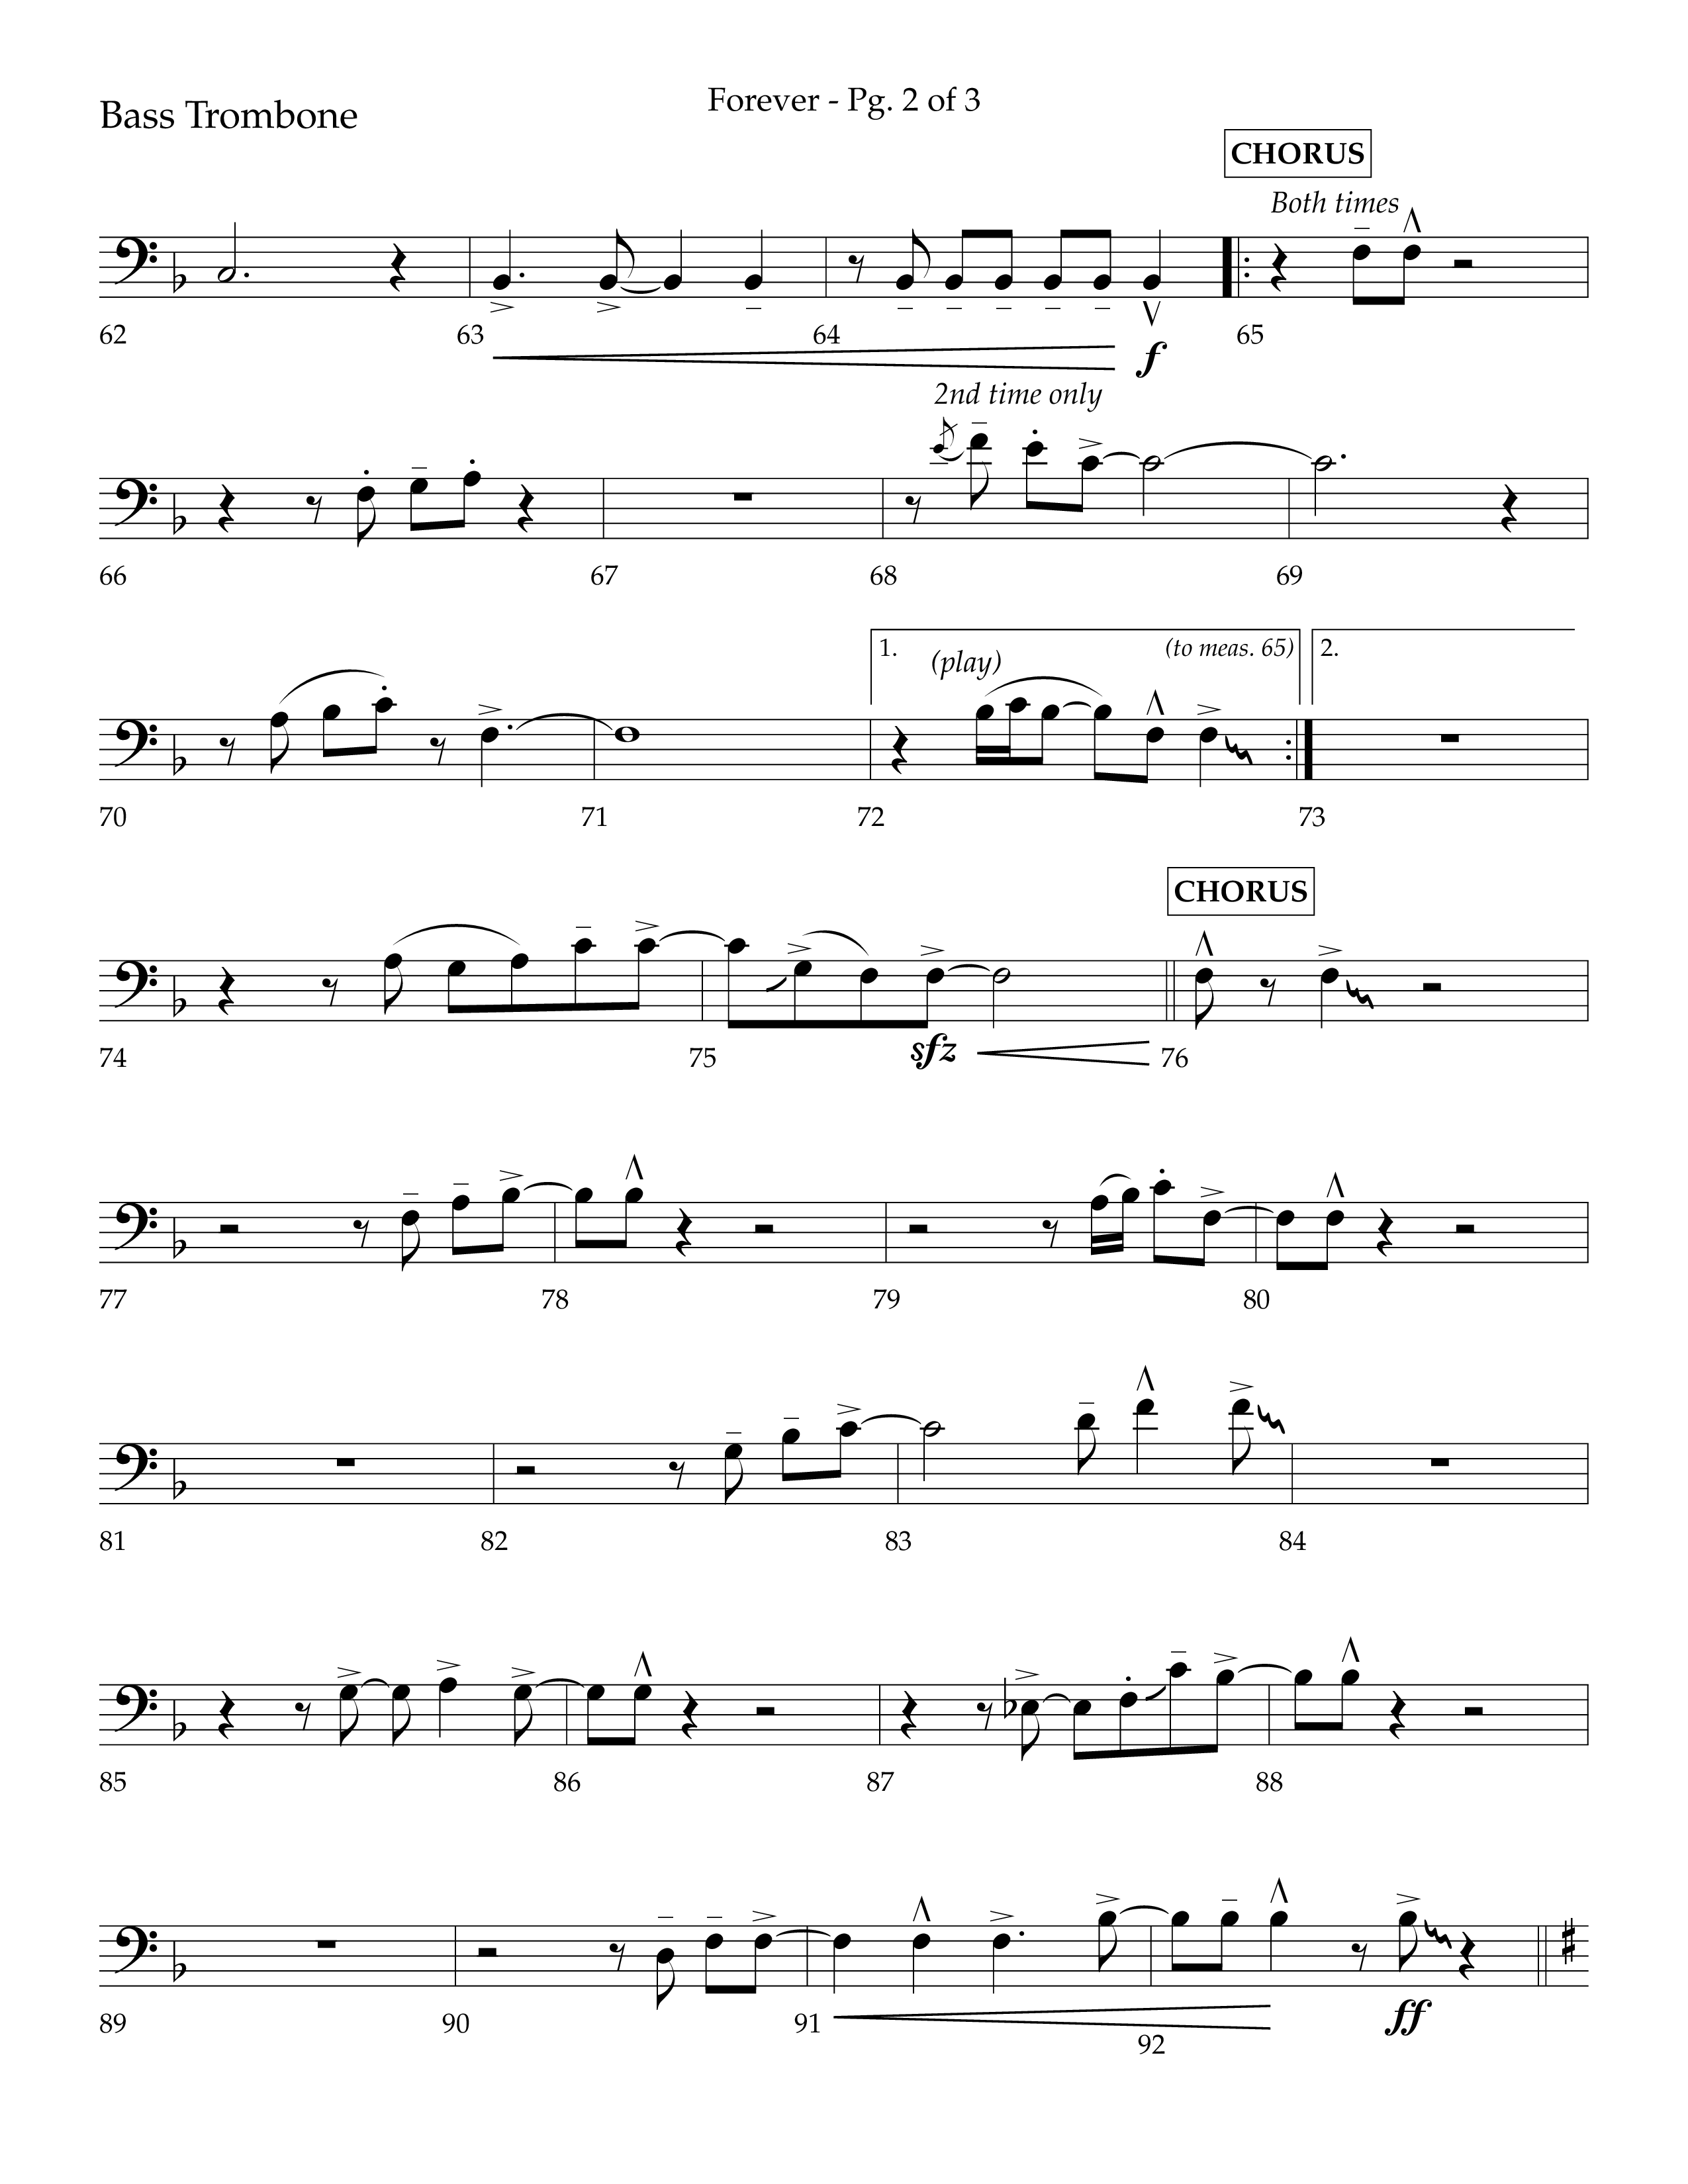 Forever (with Sing Praise) (Choral Anthem SATB) Bass Trombone (Lifeway Choral / Arr. Danny Zaloudik)